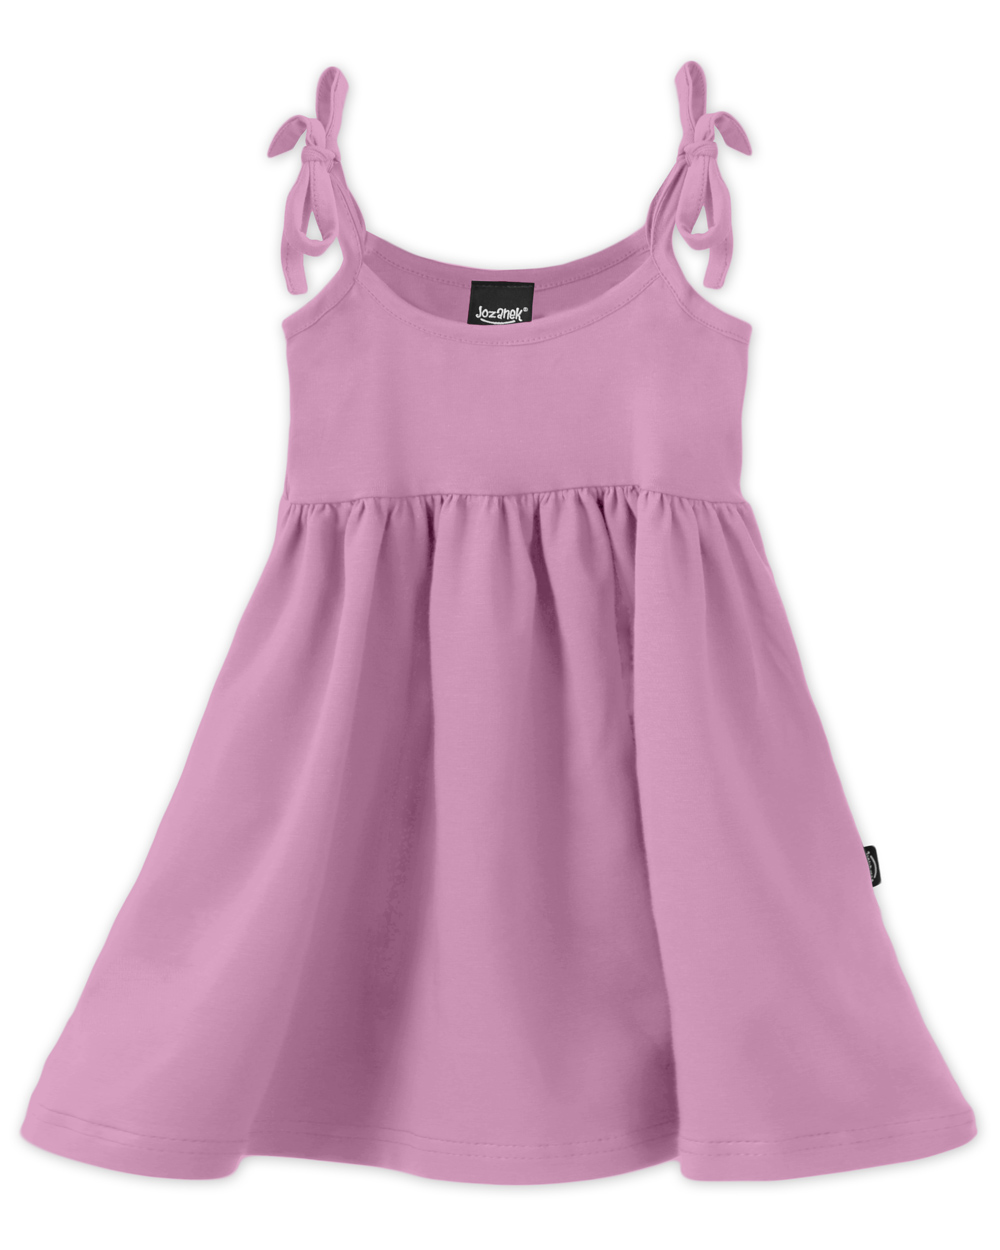 Children’s dresses, tying on shoulders, purple